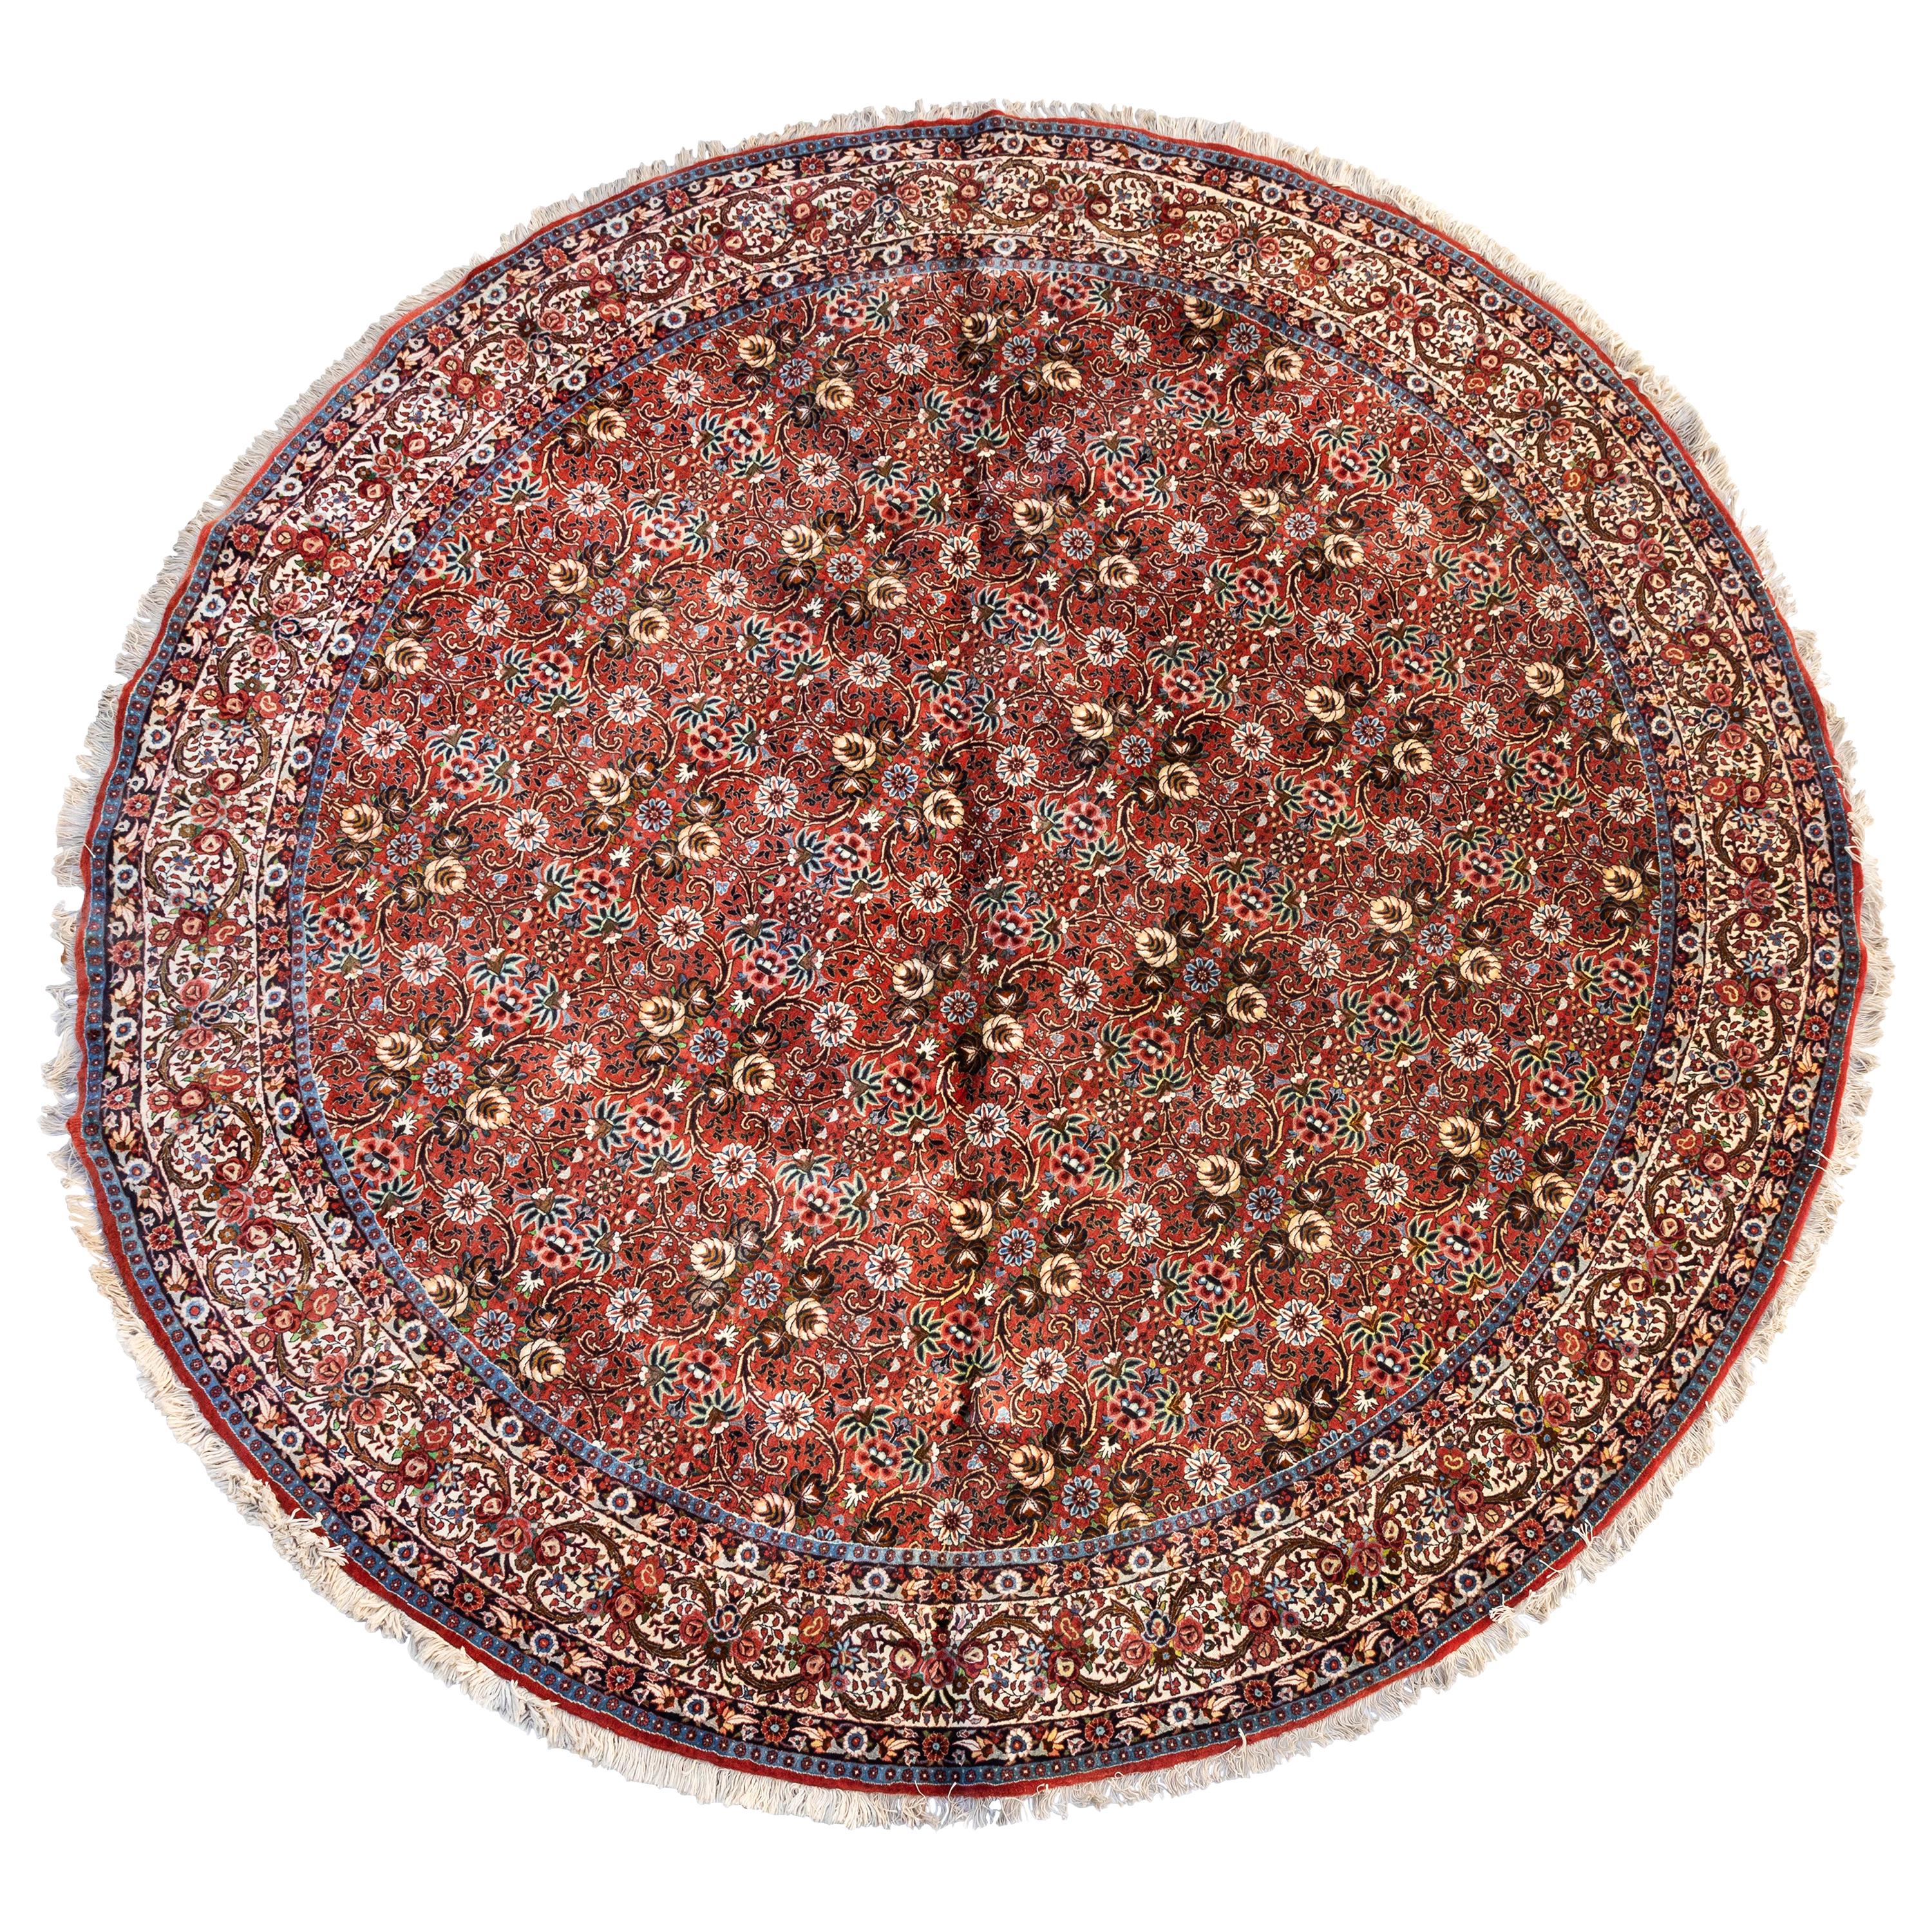 Semi Antique Round Circular Red Brown Navy Blue Ivory Floral Persian Bidjar Rug